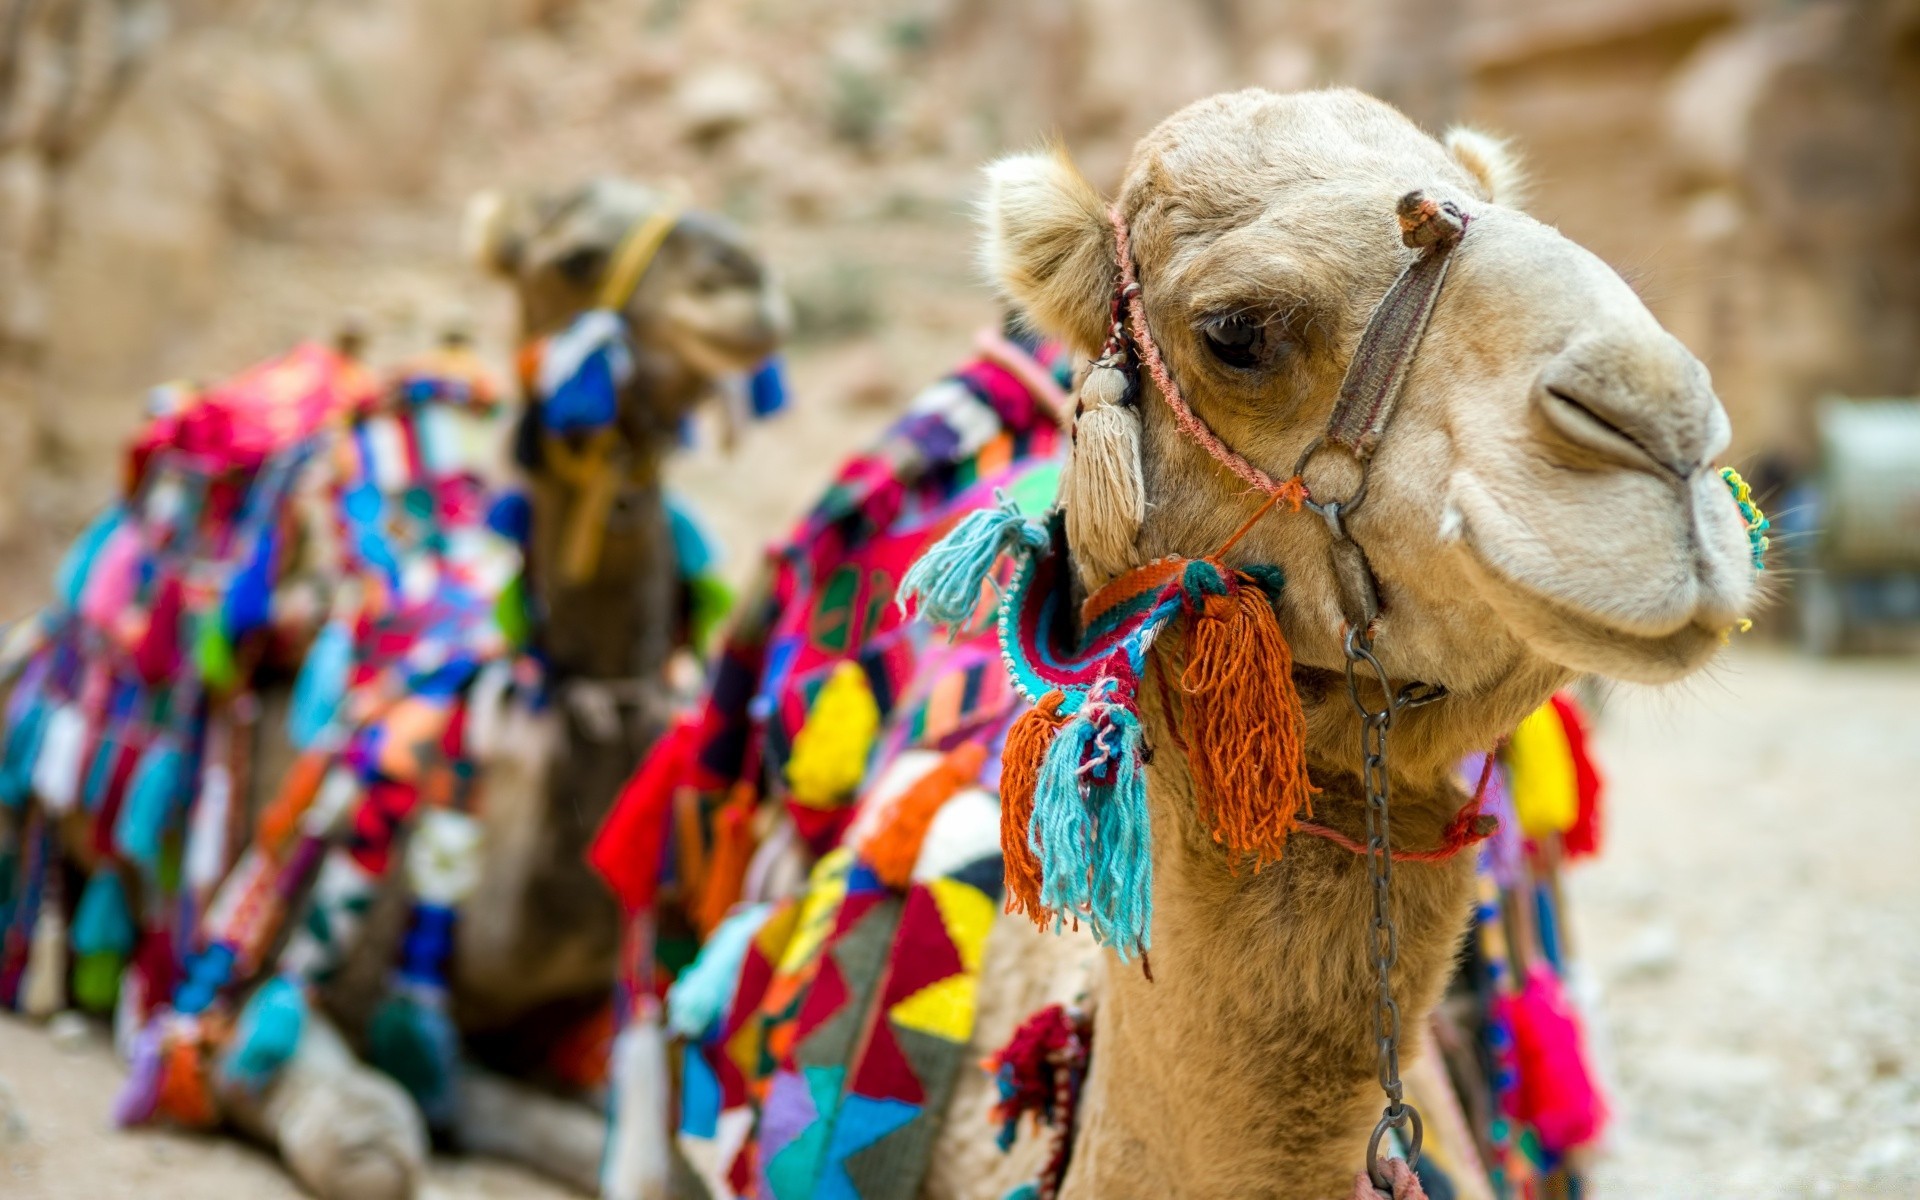 animals camel arabian camel traditional festival culture bedouin desert travel bulge religion carnival market group